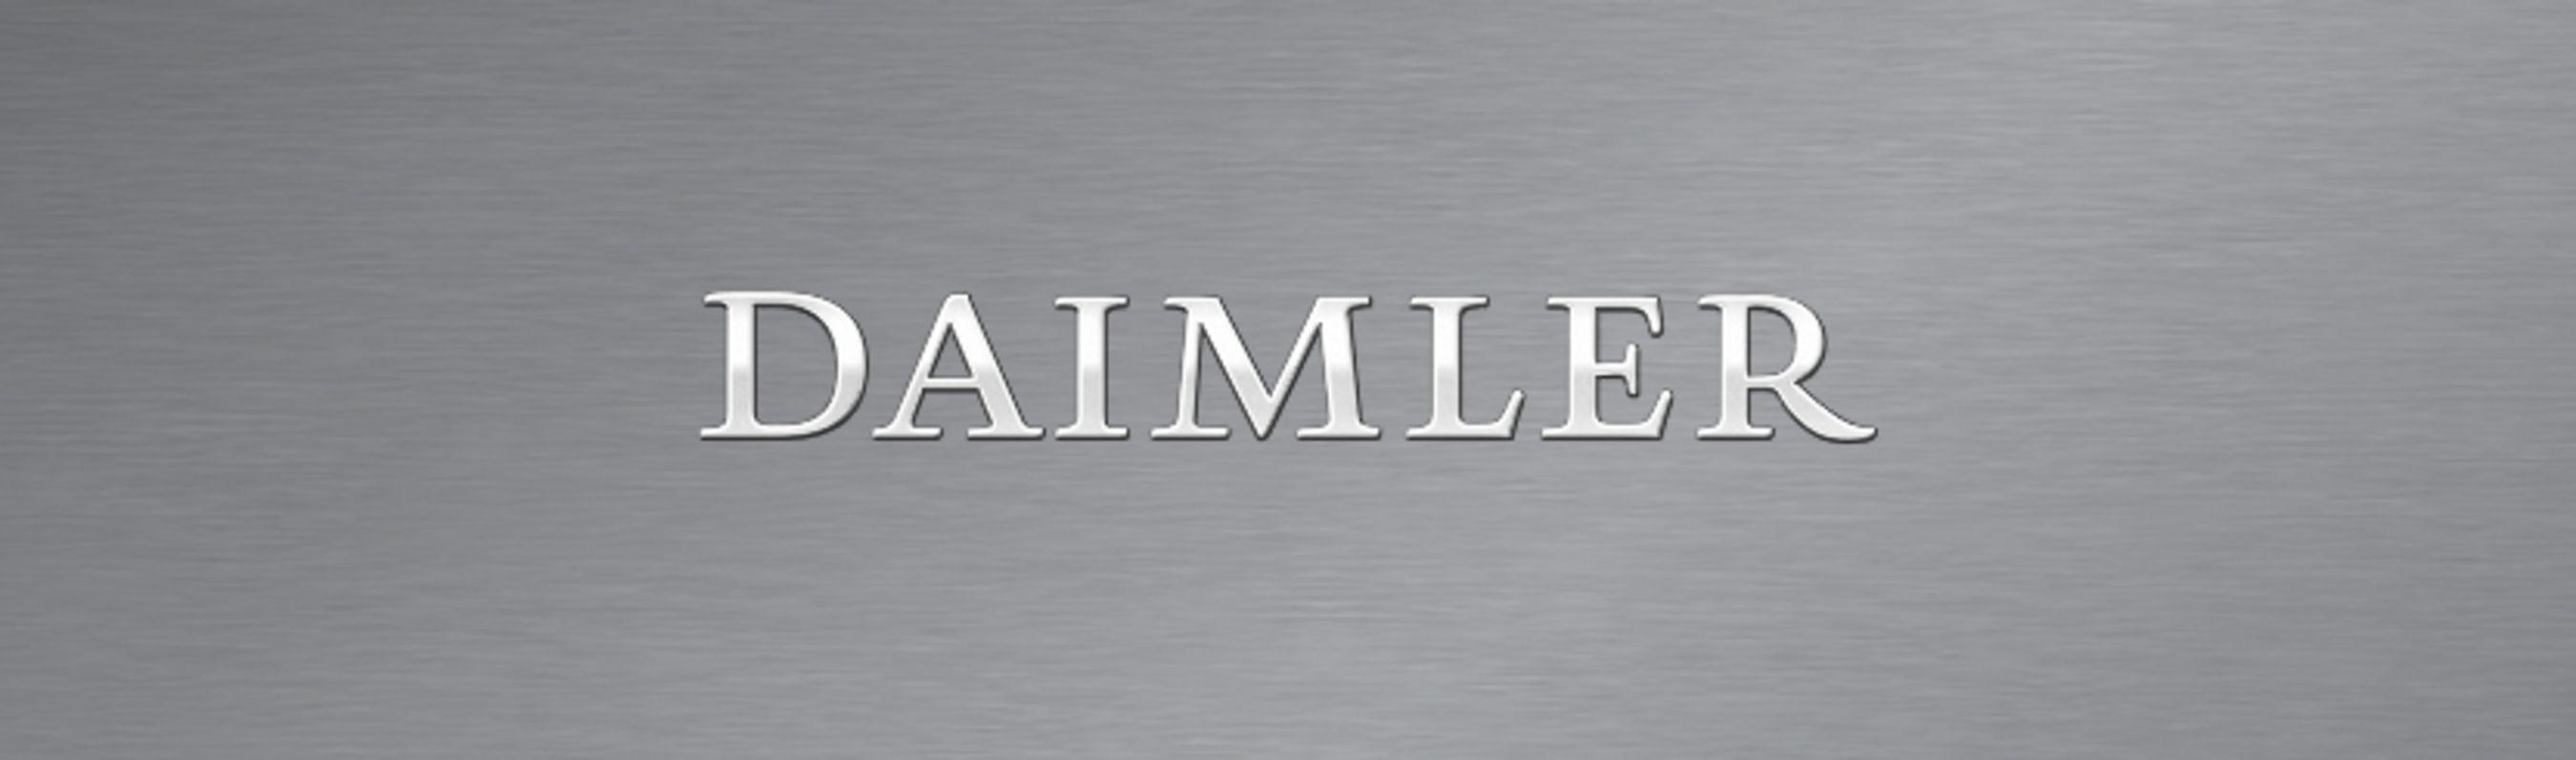 Daimler Trucks Logo - Daimler Trucks North America collaborates with AT&T and Microsoft